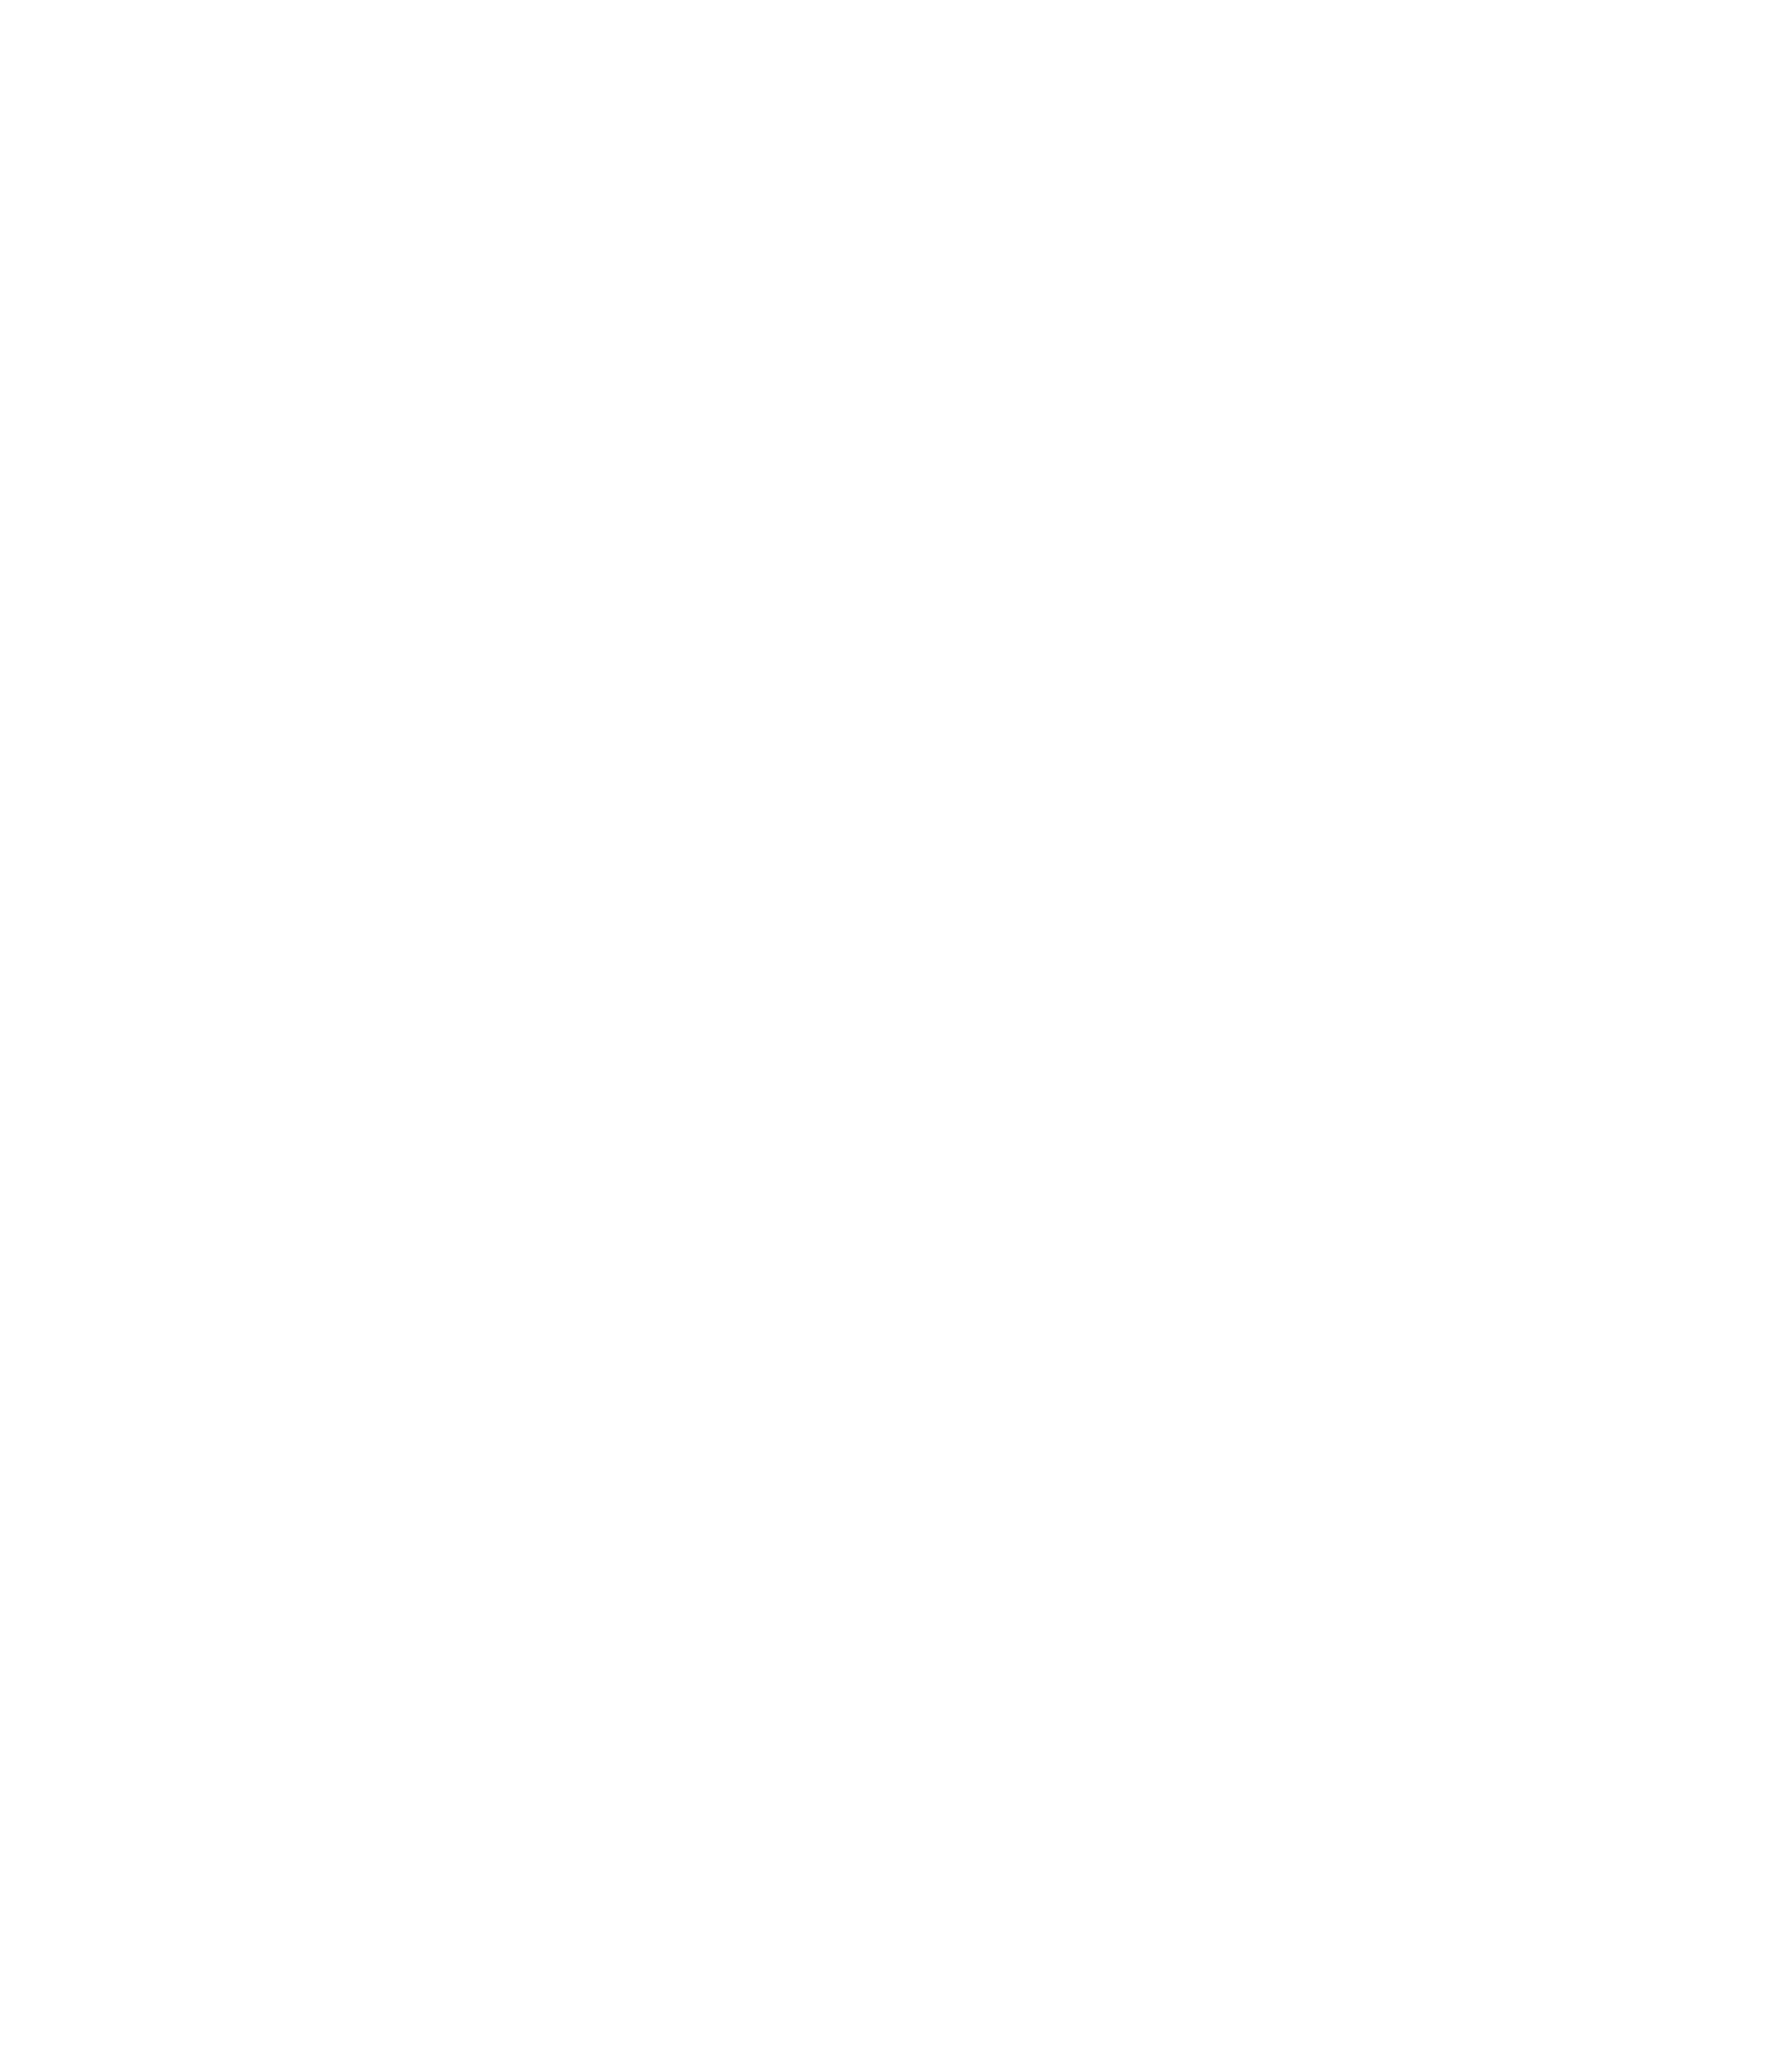 Pixel art adaptation of the Twitch logo